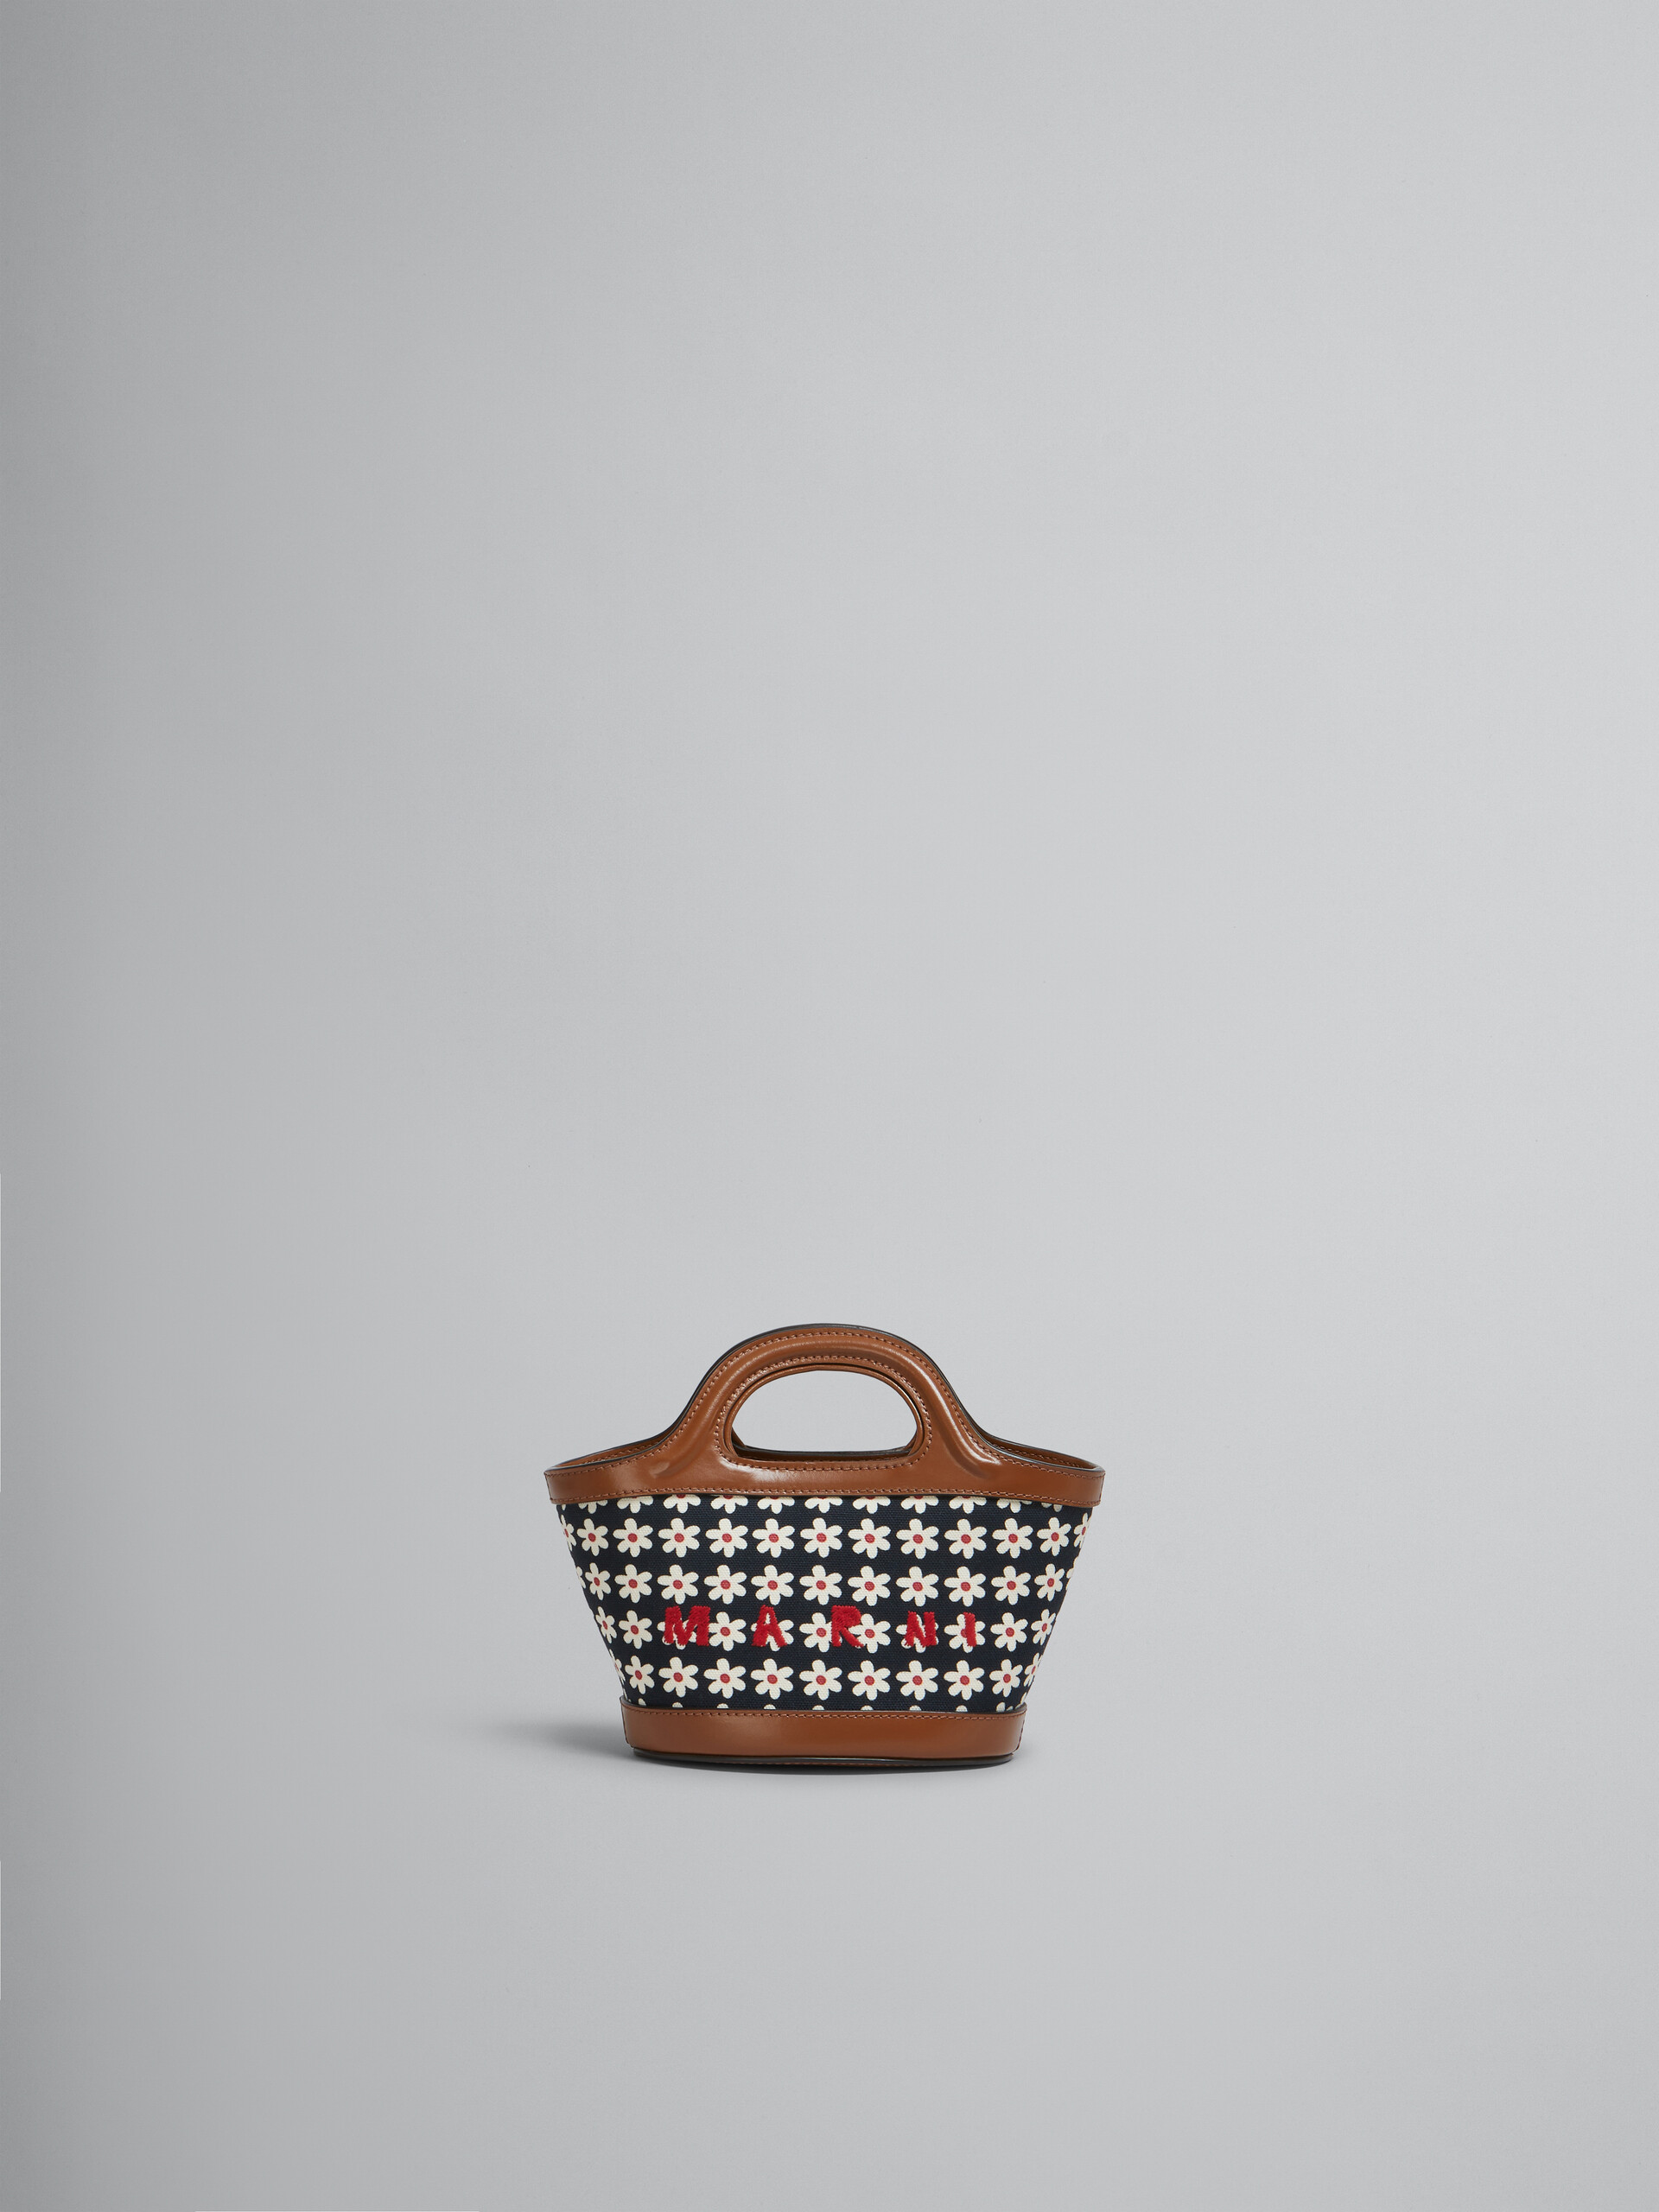 Black canvas Tropicalia Micro Bag with daisy print - Handbags - Image 1